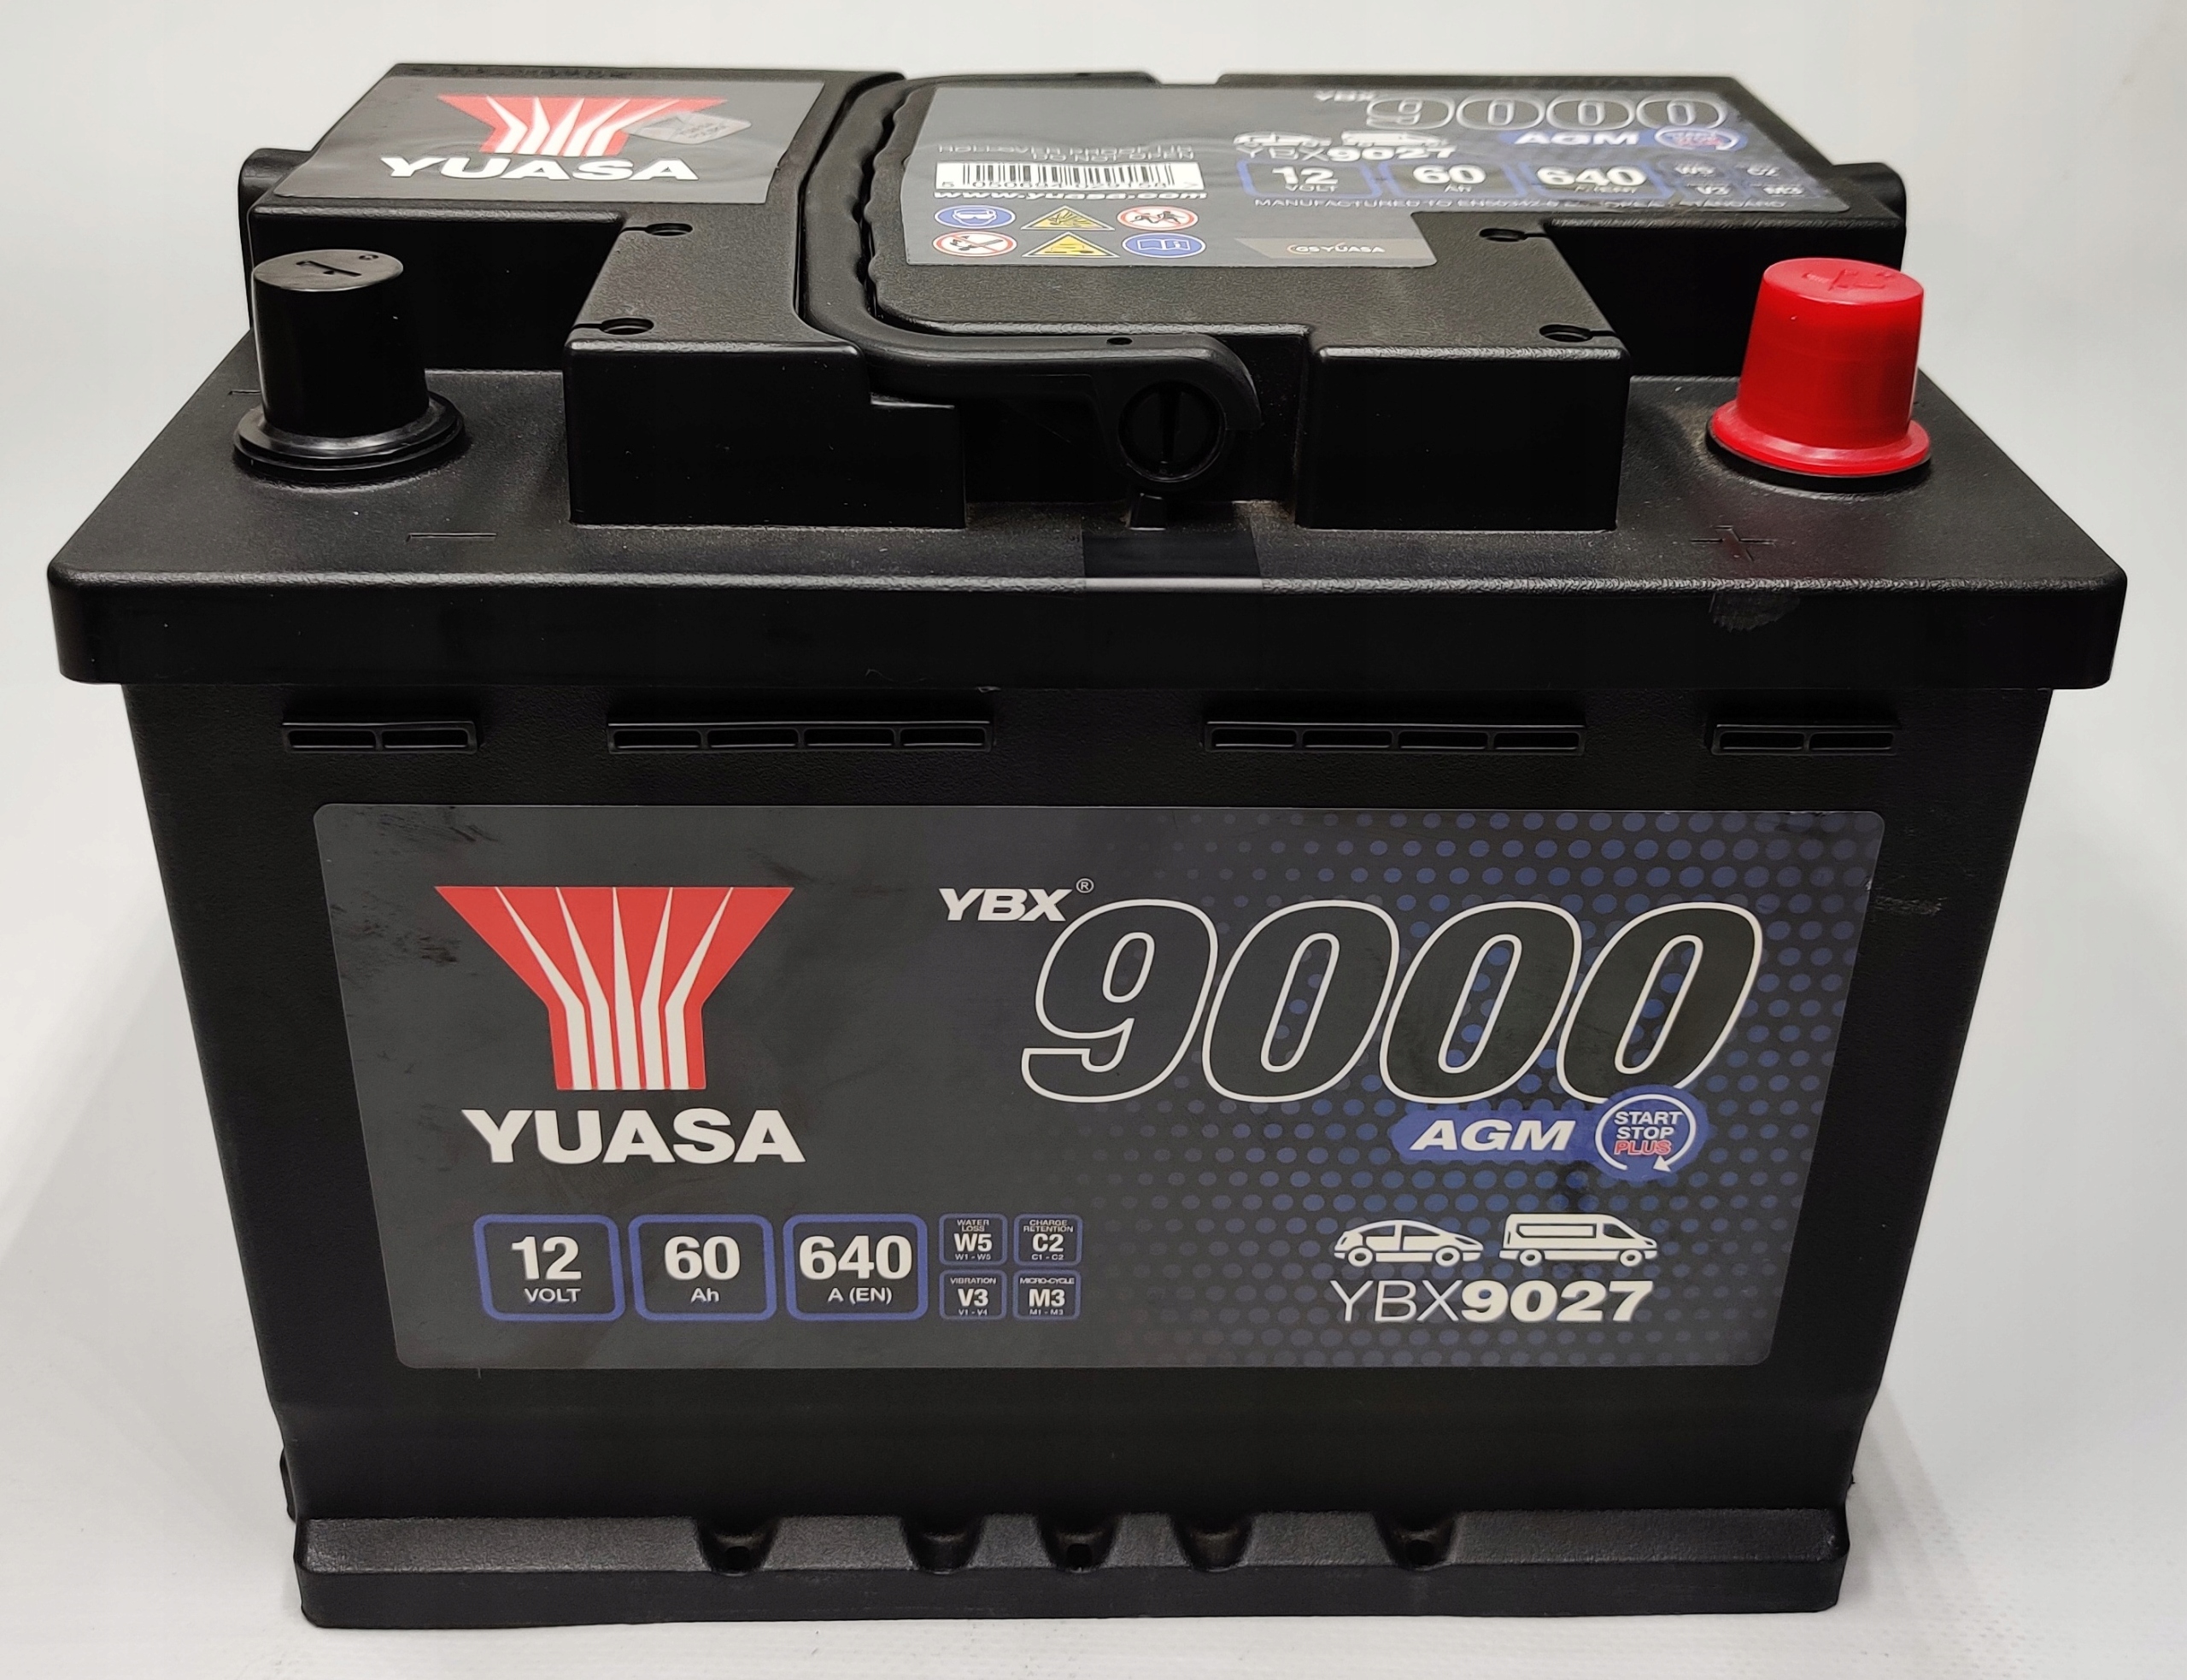 Akumulator Yuasa YBX 9027 AGM 12V 60Ah 640A P+ YBX9027 za 589,90